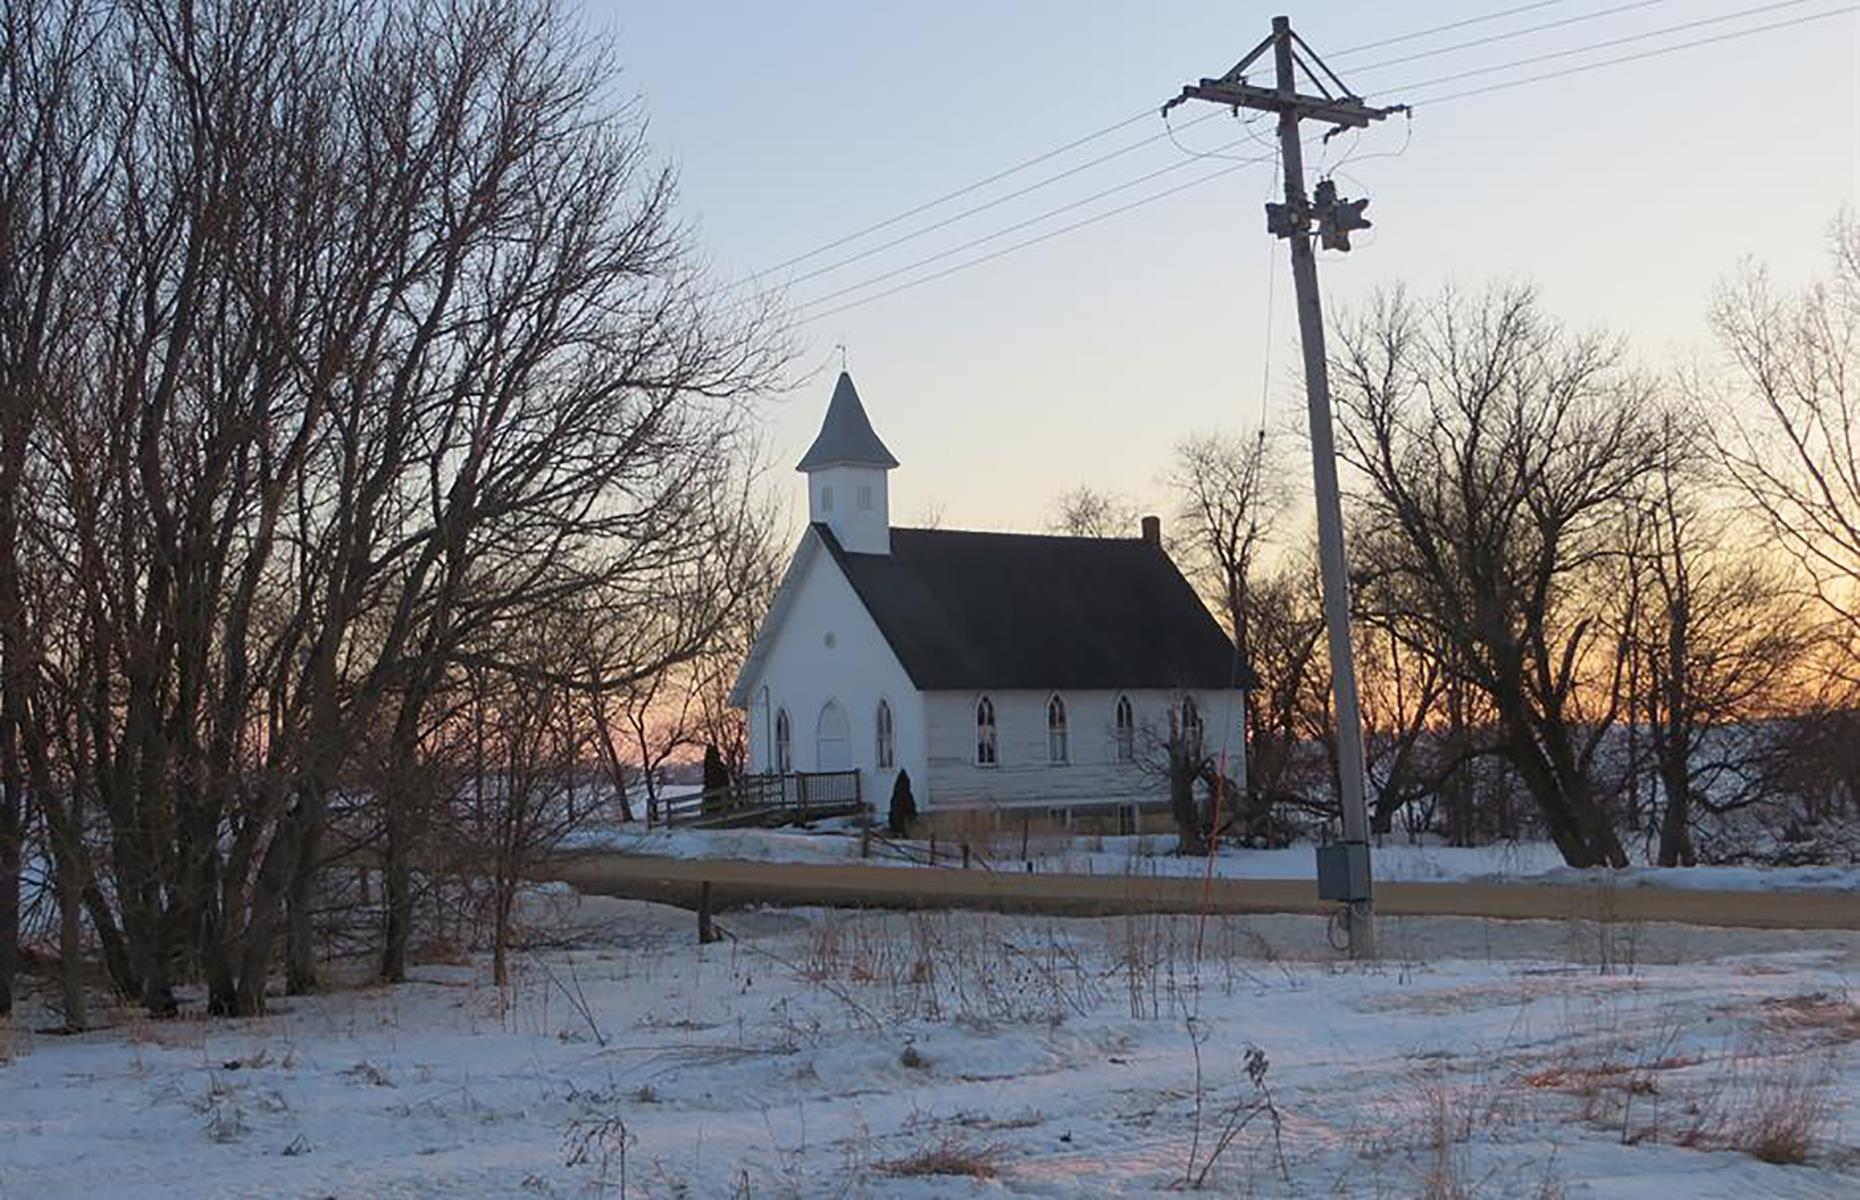 Iowa: Buckhorn ghost town, Jackson County